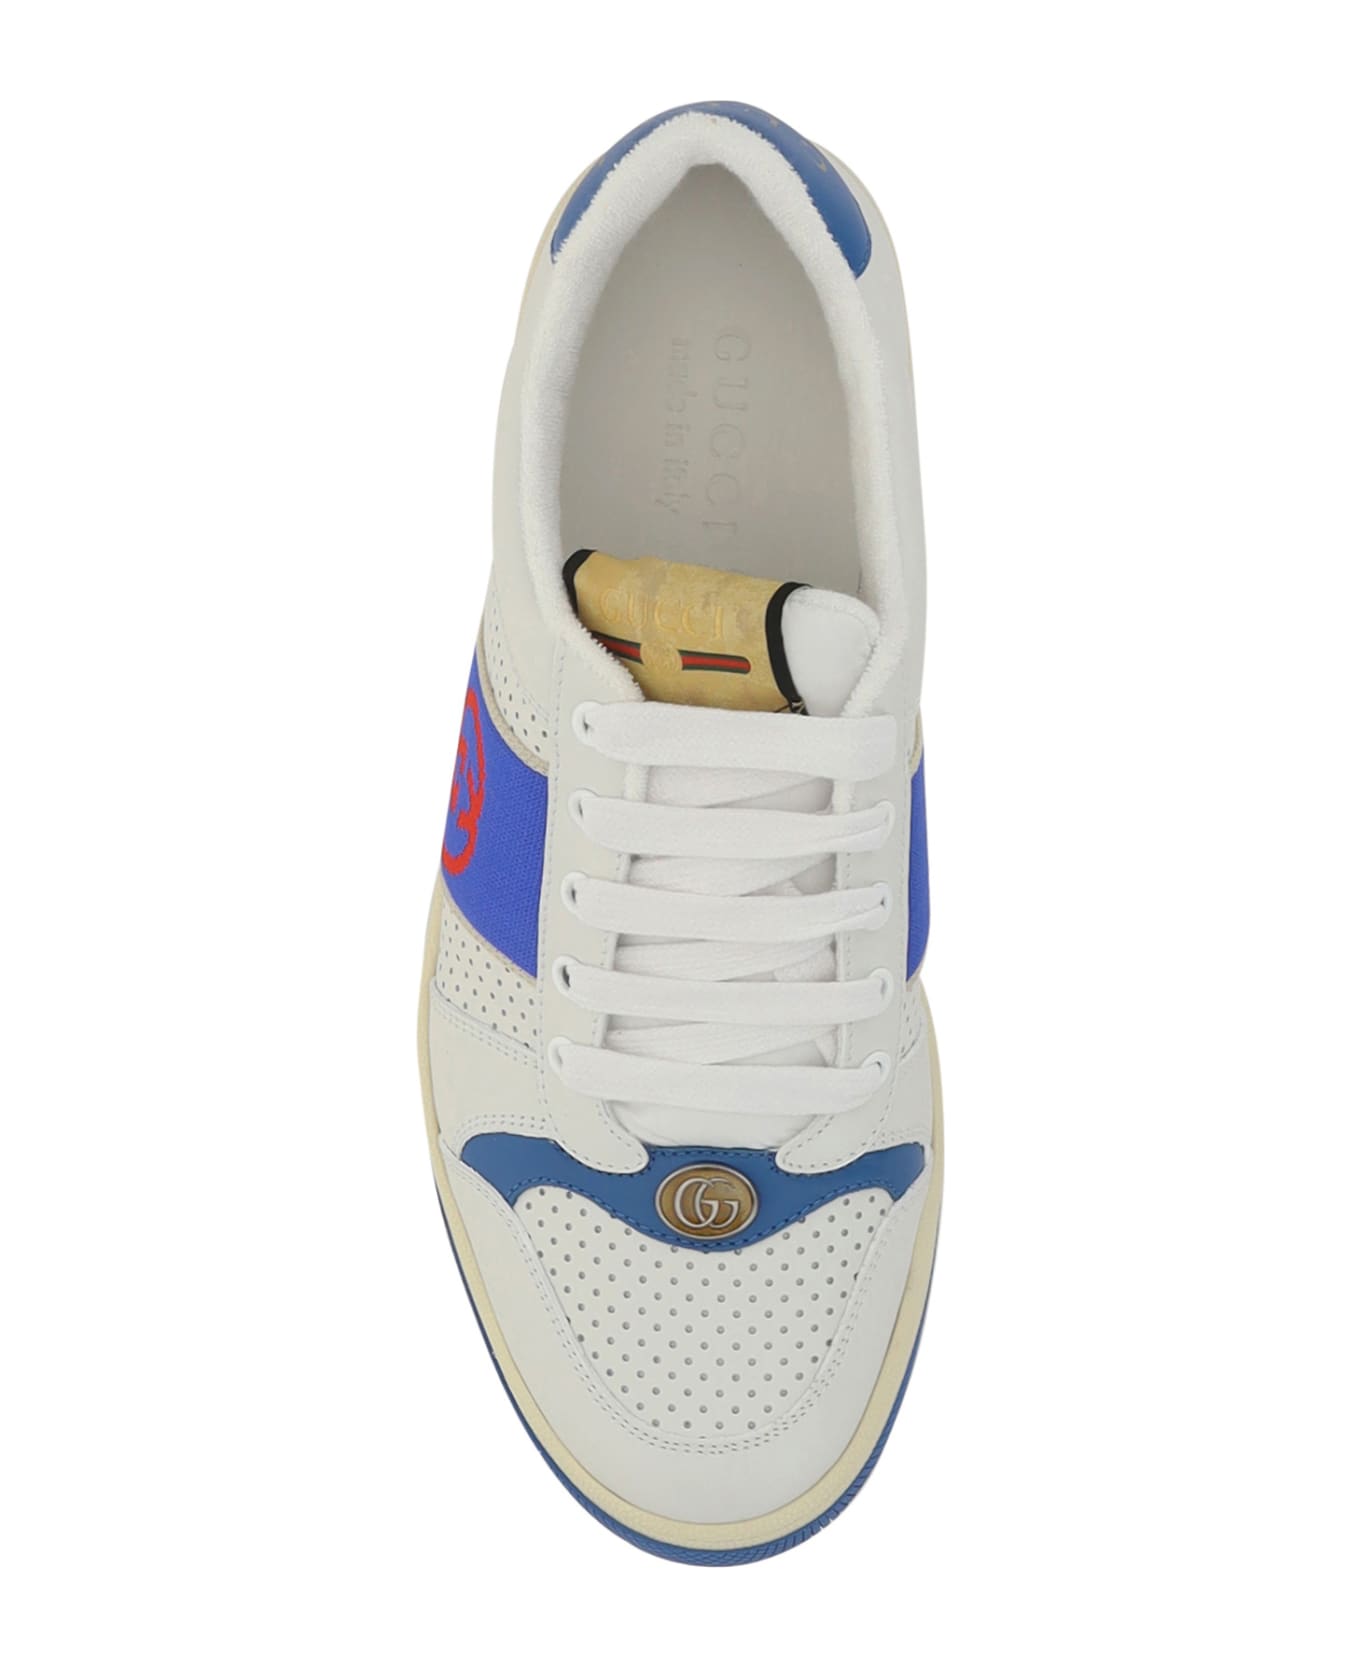 Gucci Sneakers - White